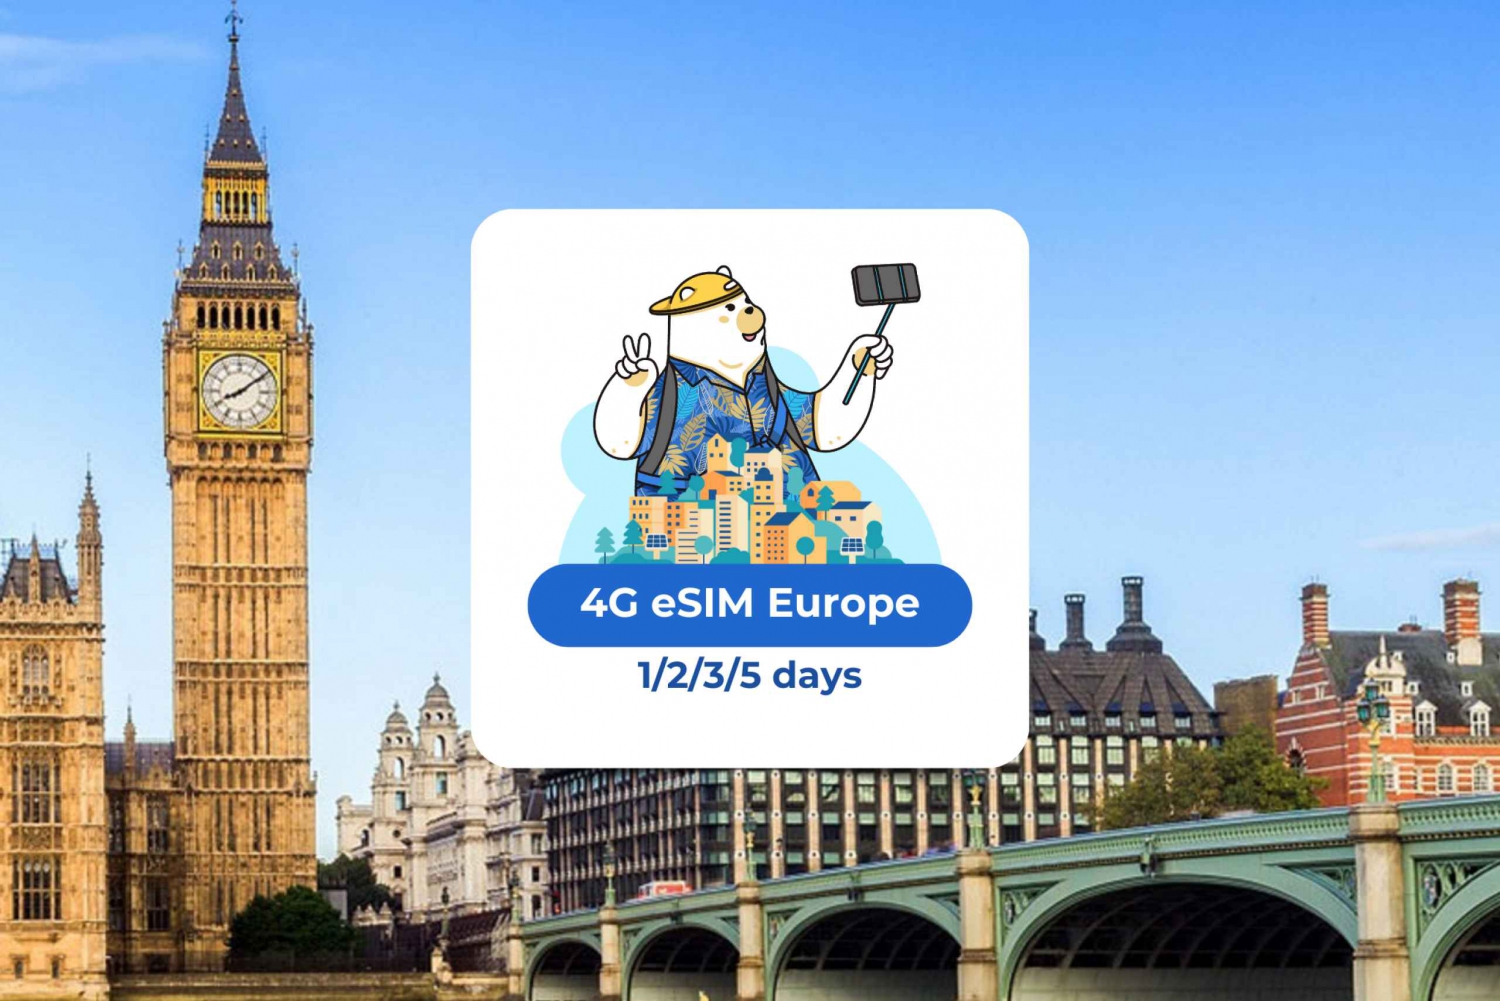 Europe: eSIM Mobile Data (33 countries) - 1/2/3/5/7 days